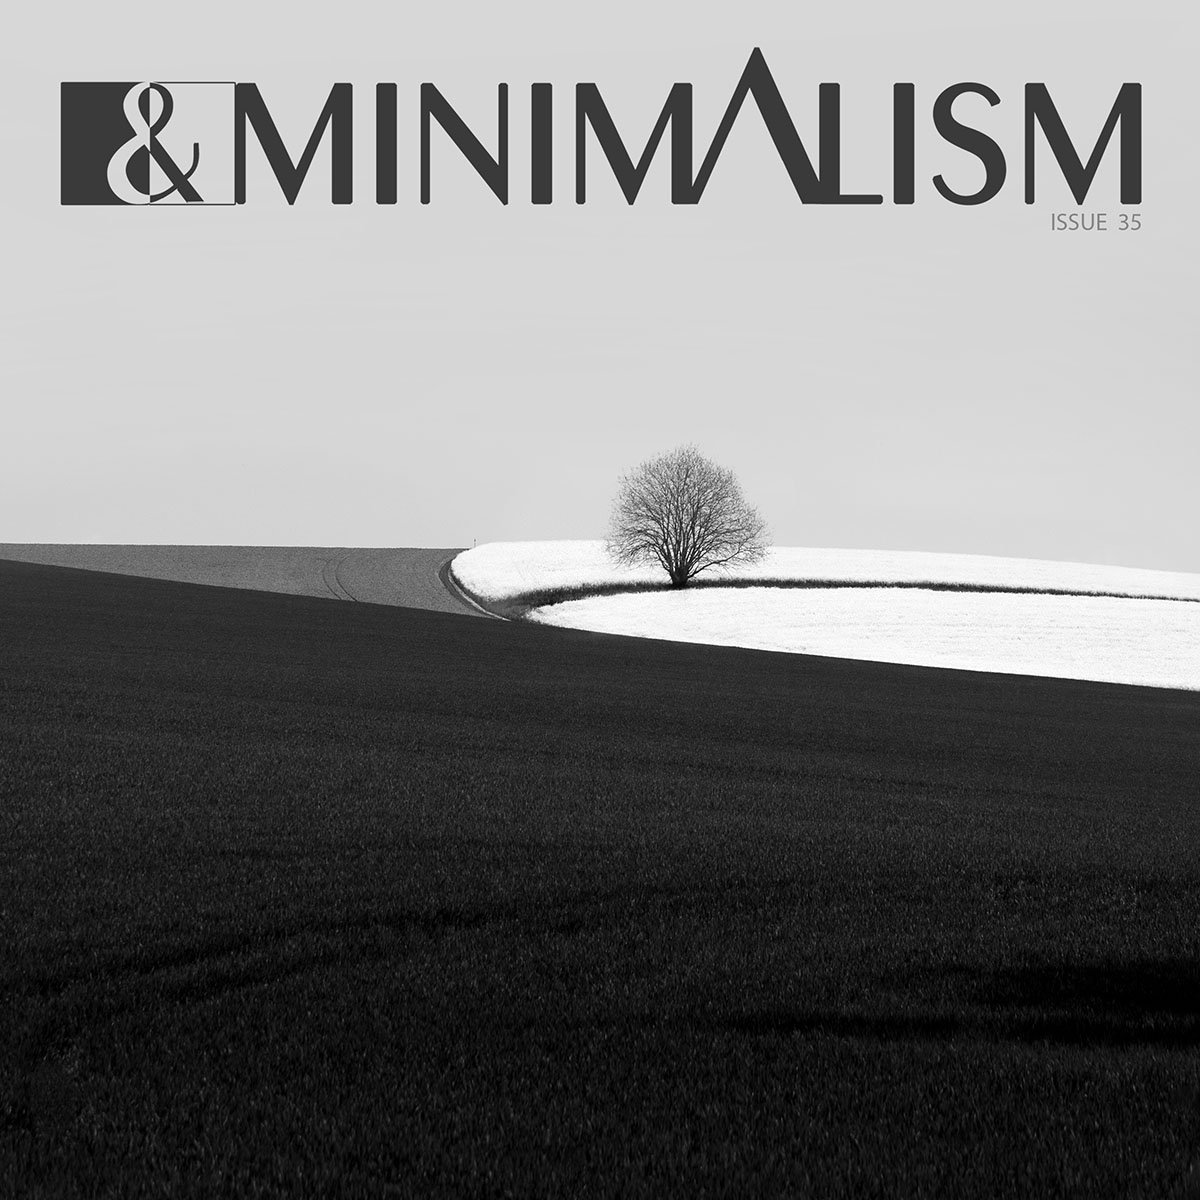 Minimalist photography journal